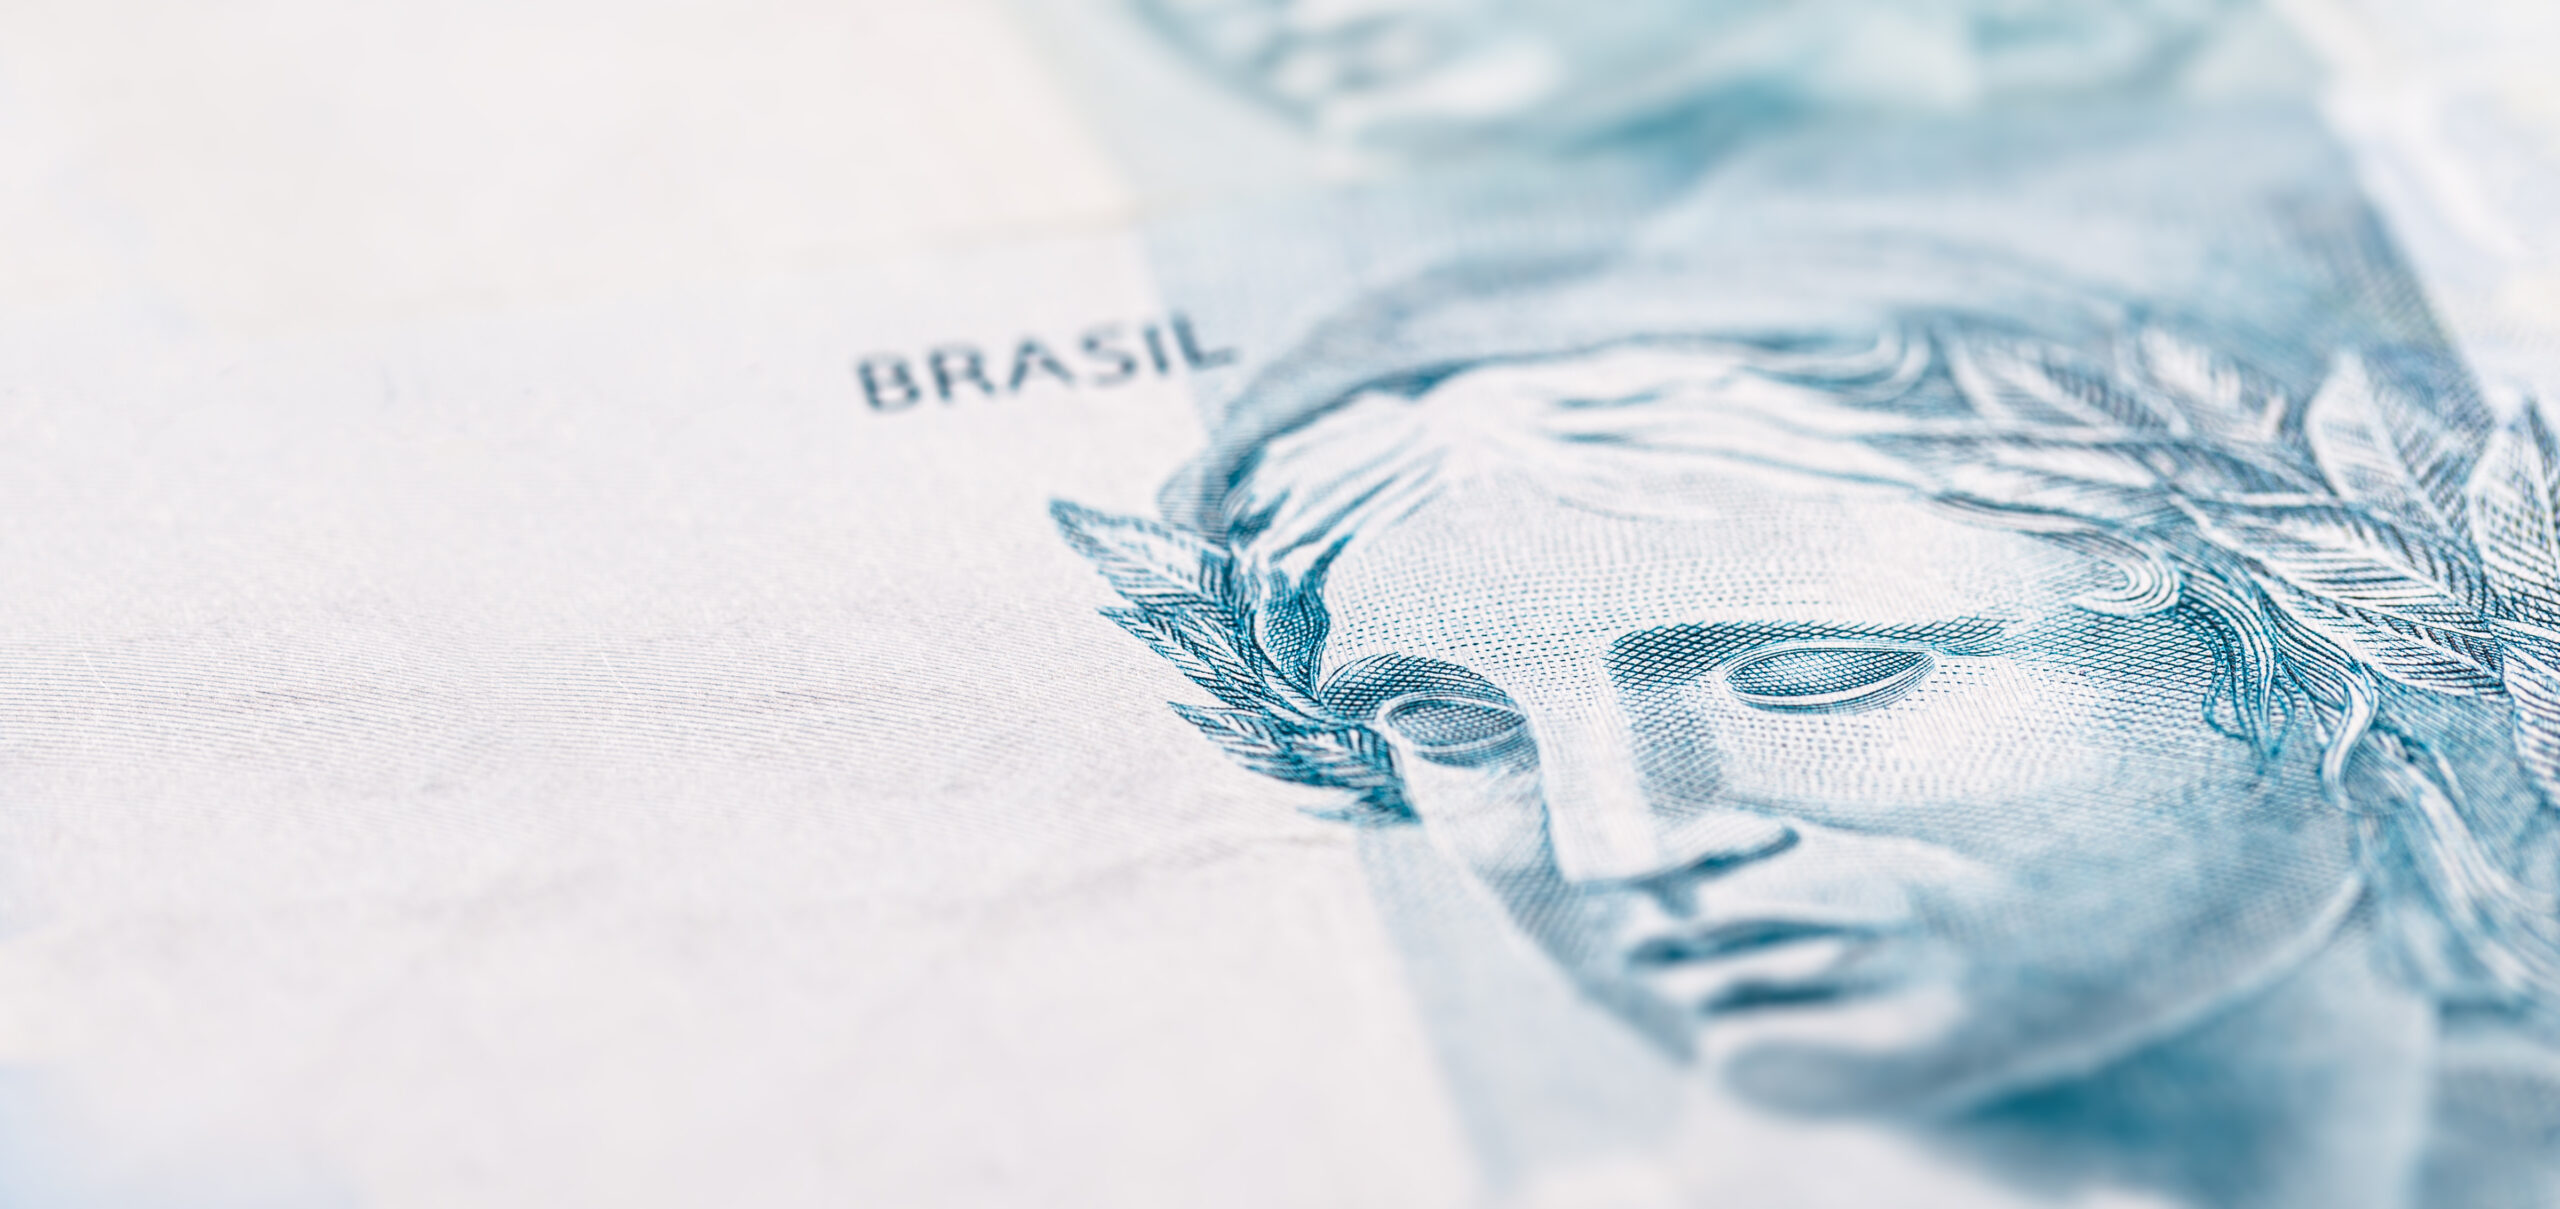 detail of a 100 reais banknote